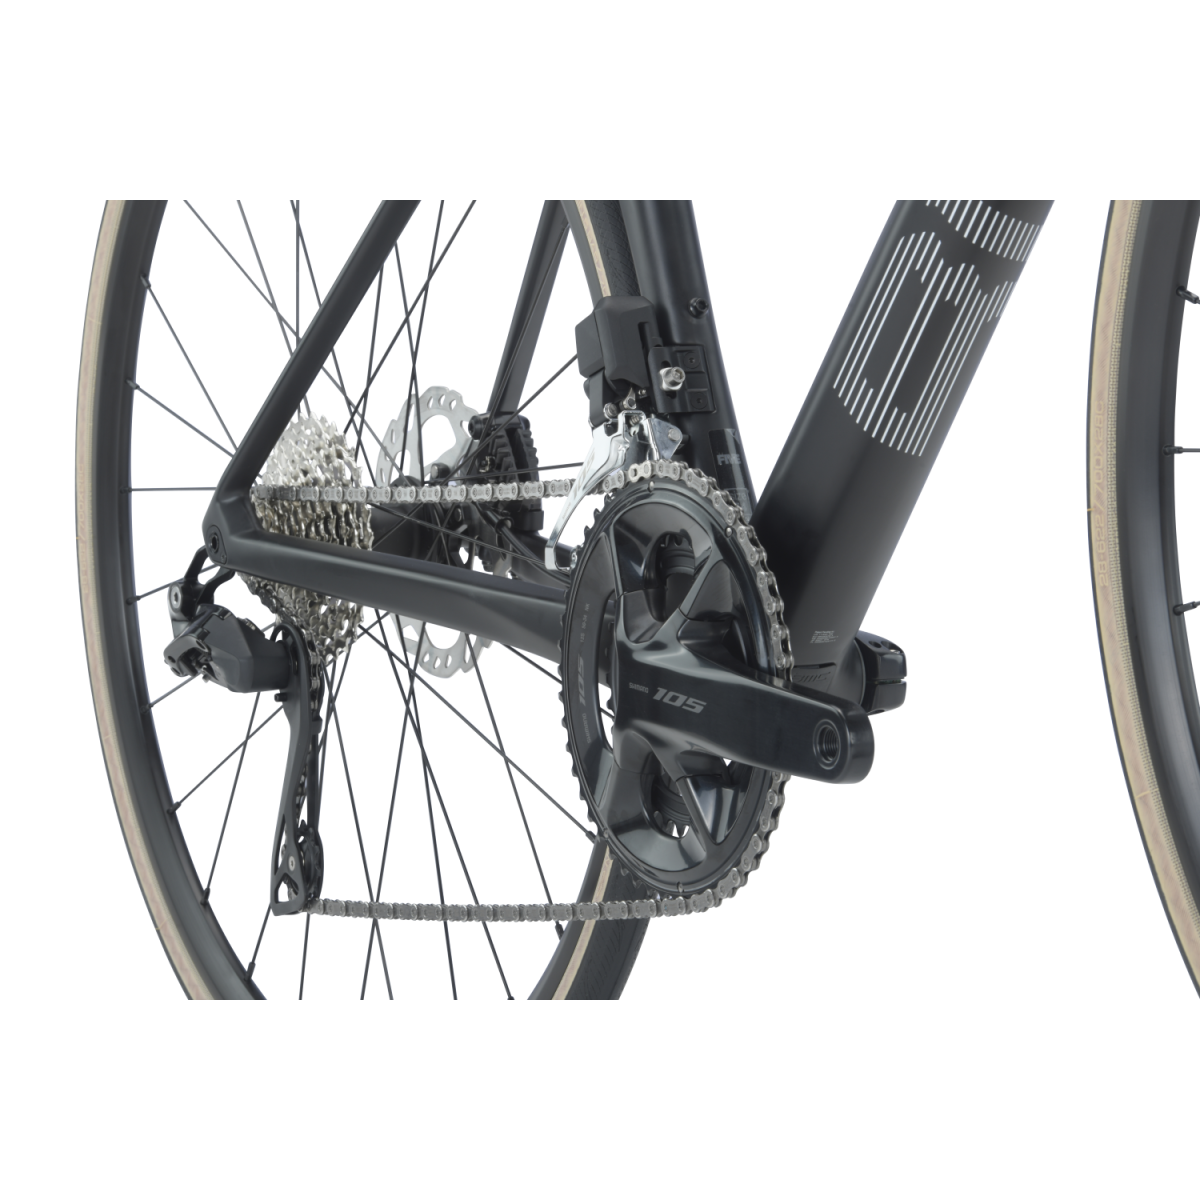 BMC Roadmachine Five plento dviratis / Carbon - Metallic Grey